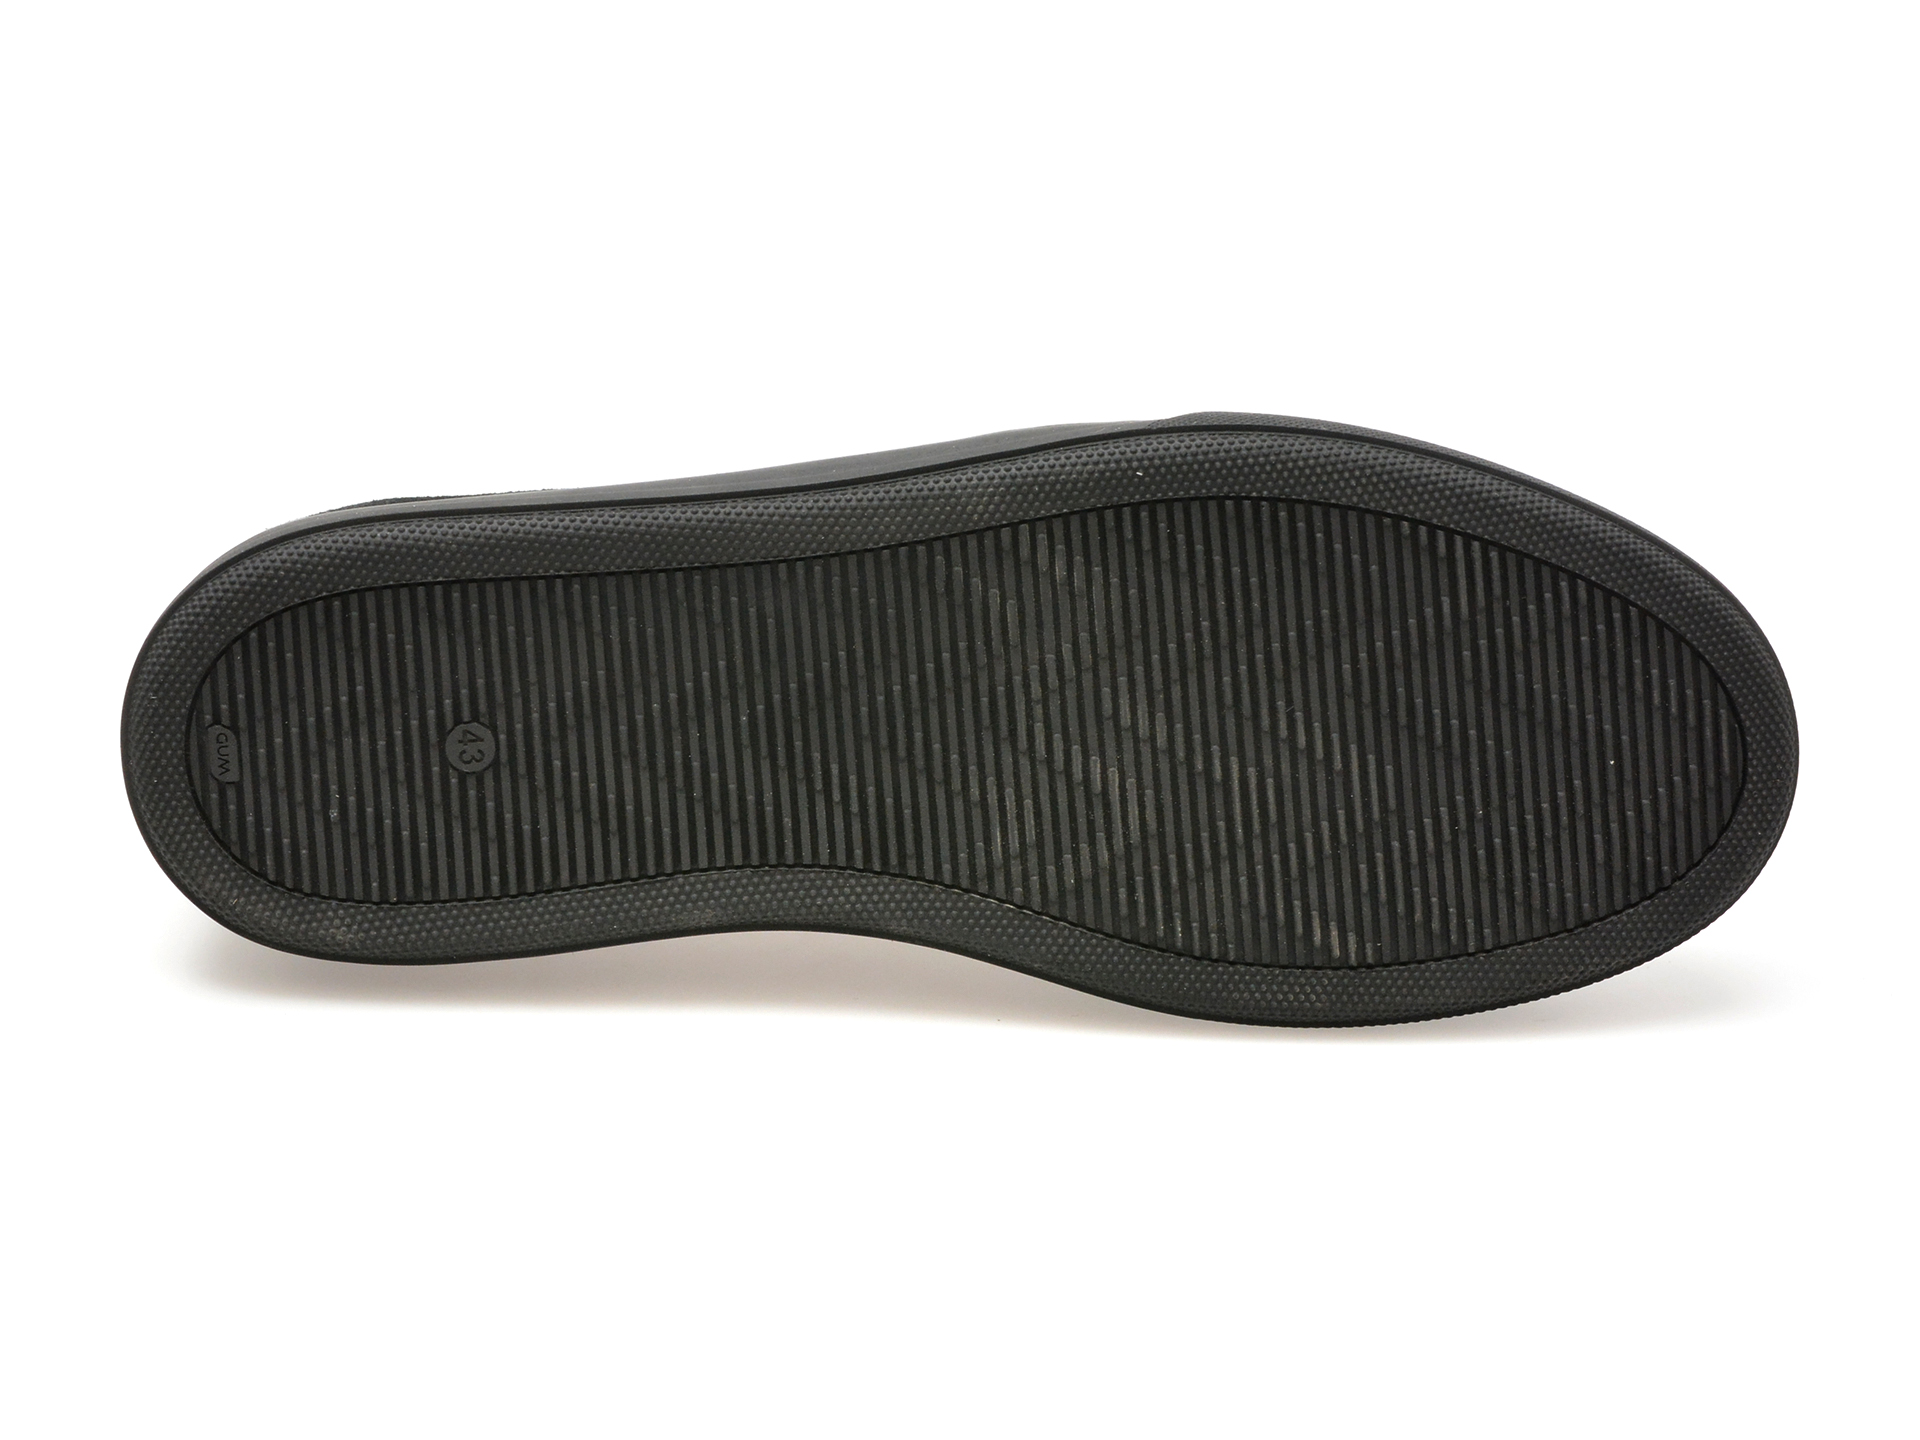 Pantofi Casual GRYXX negri, M7335, din piele naturala